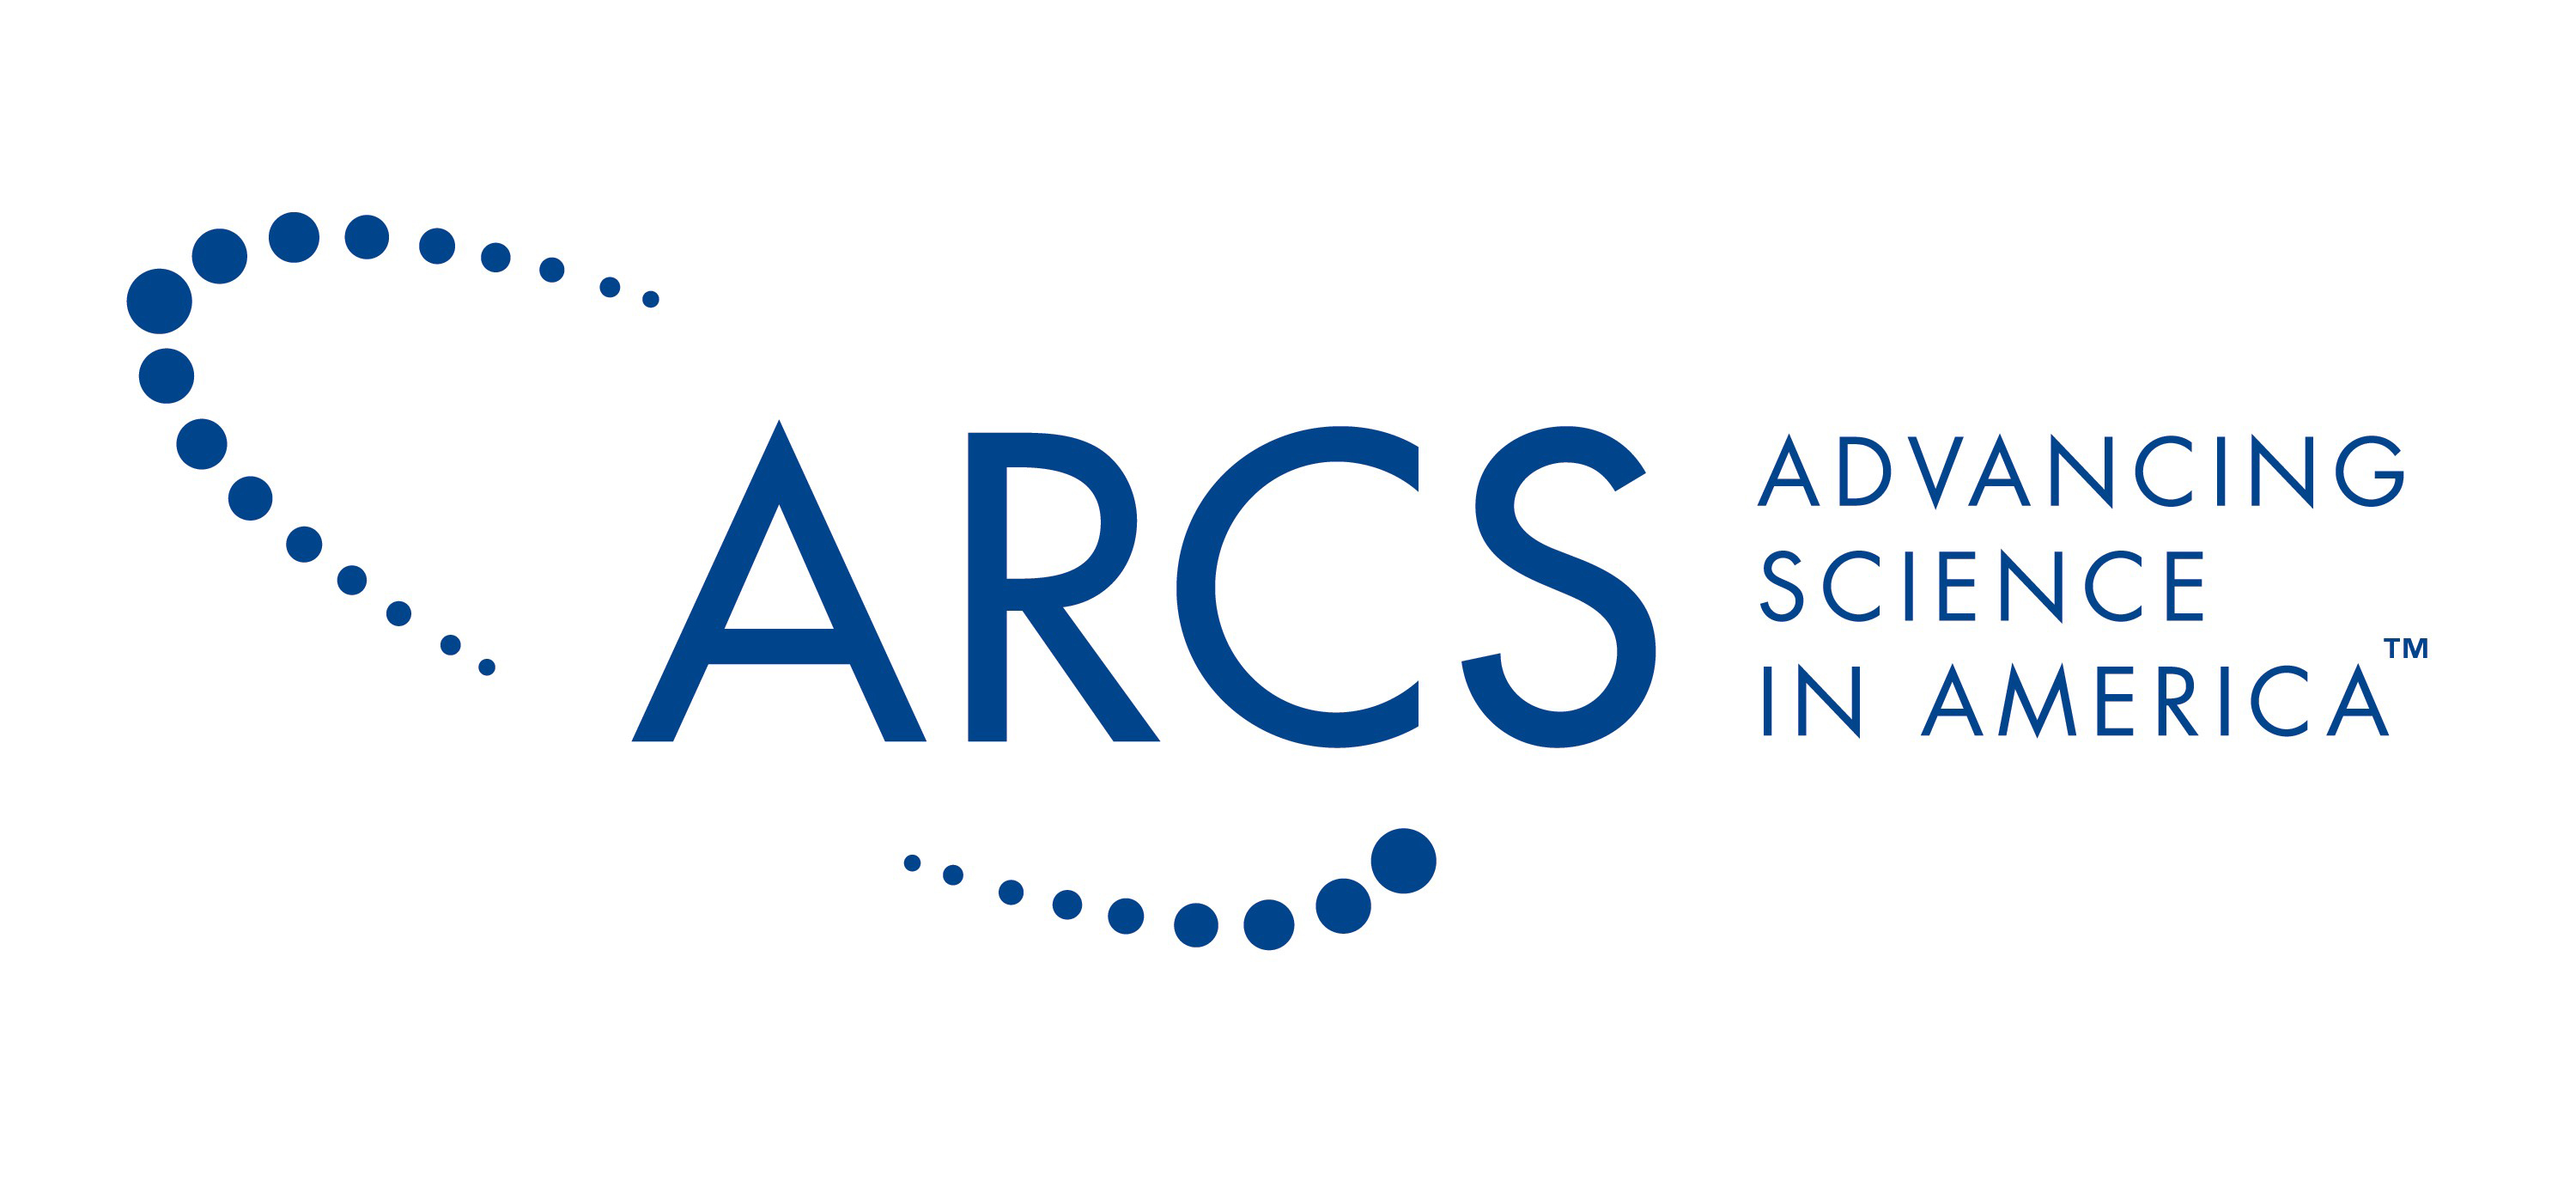 ARCS Foundation